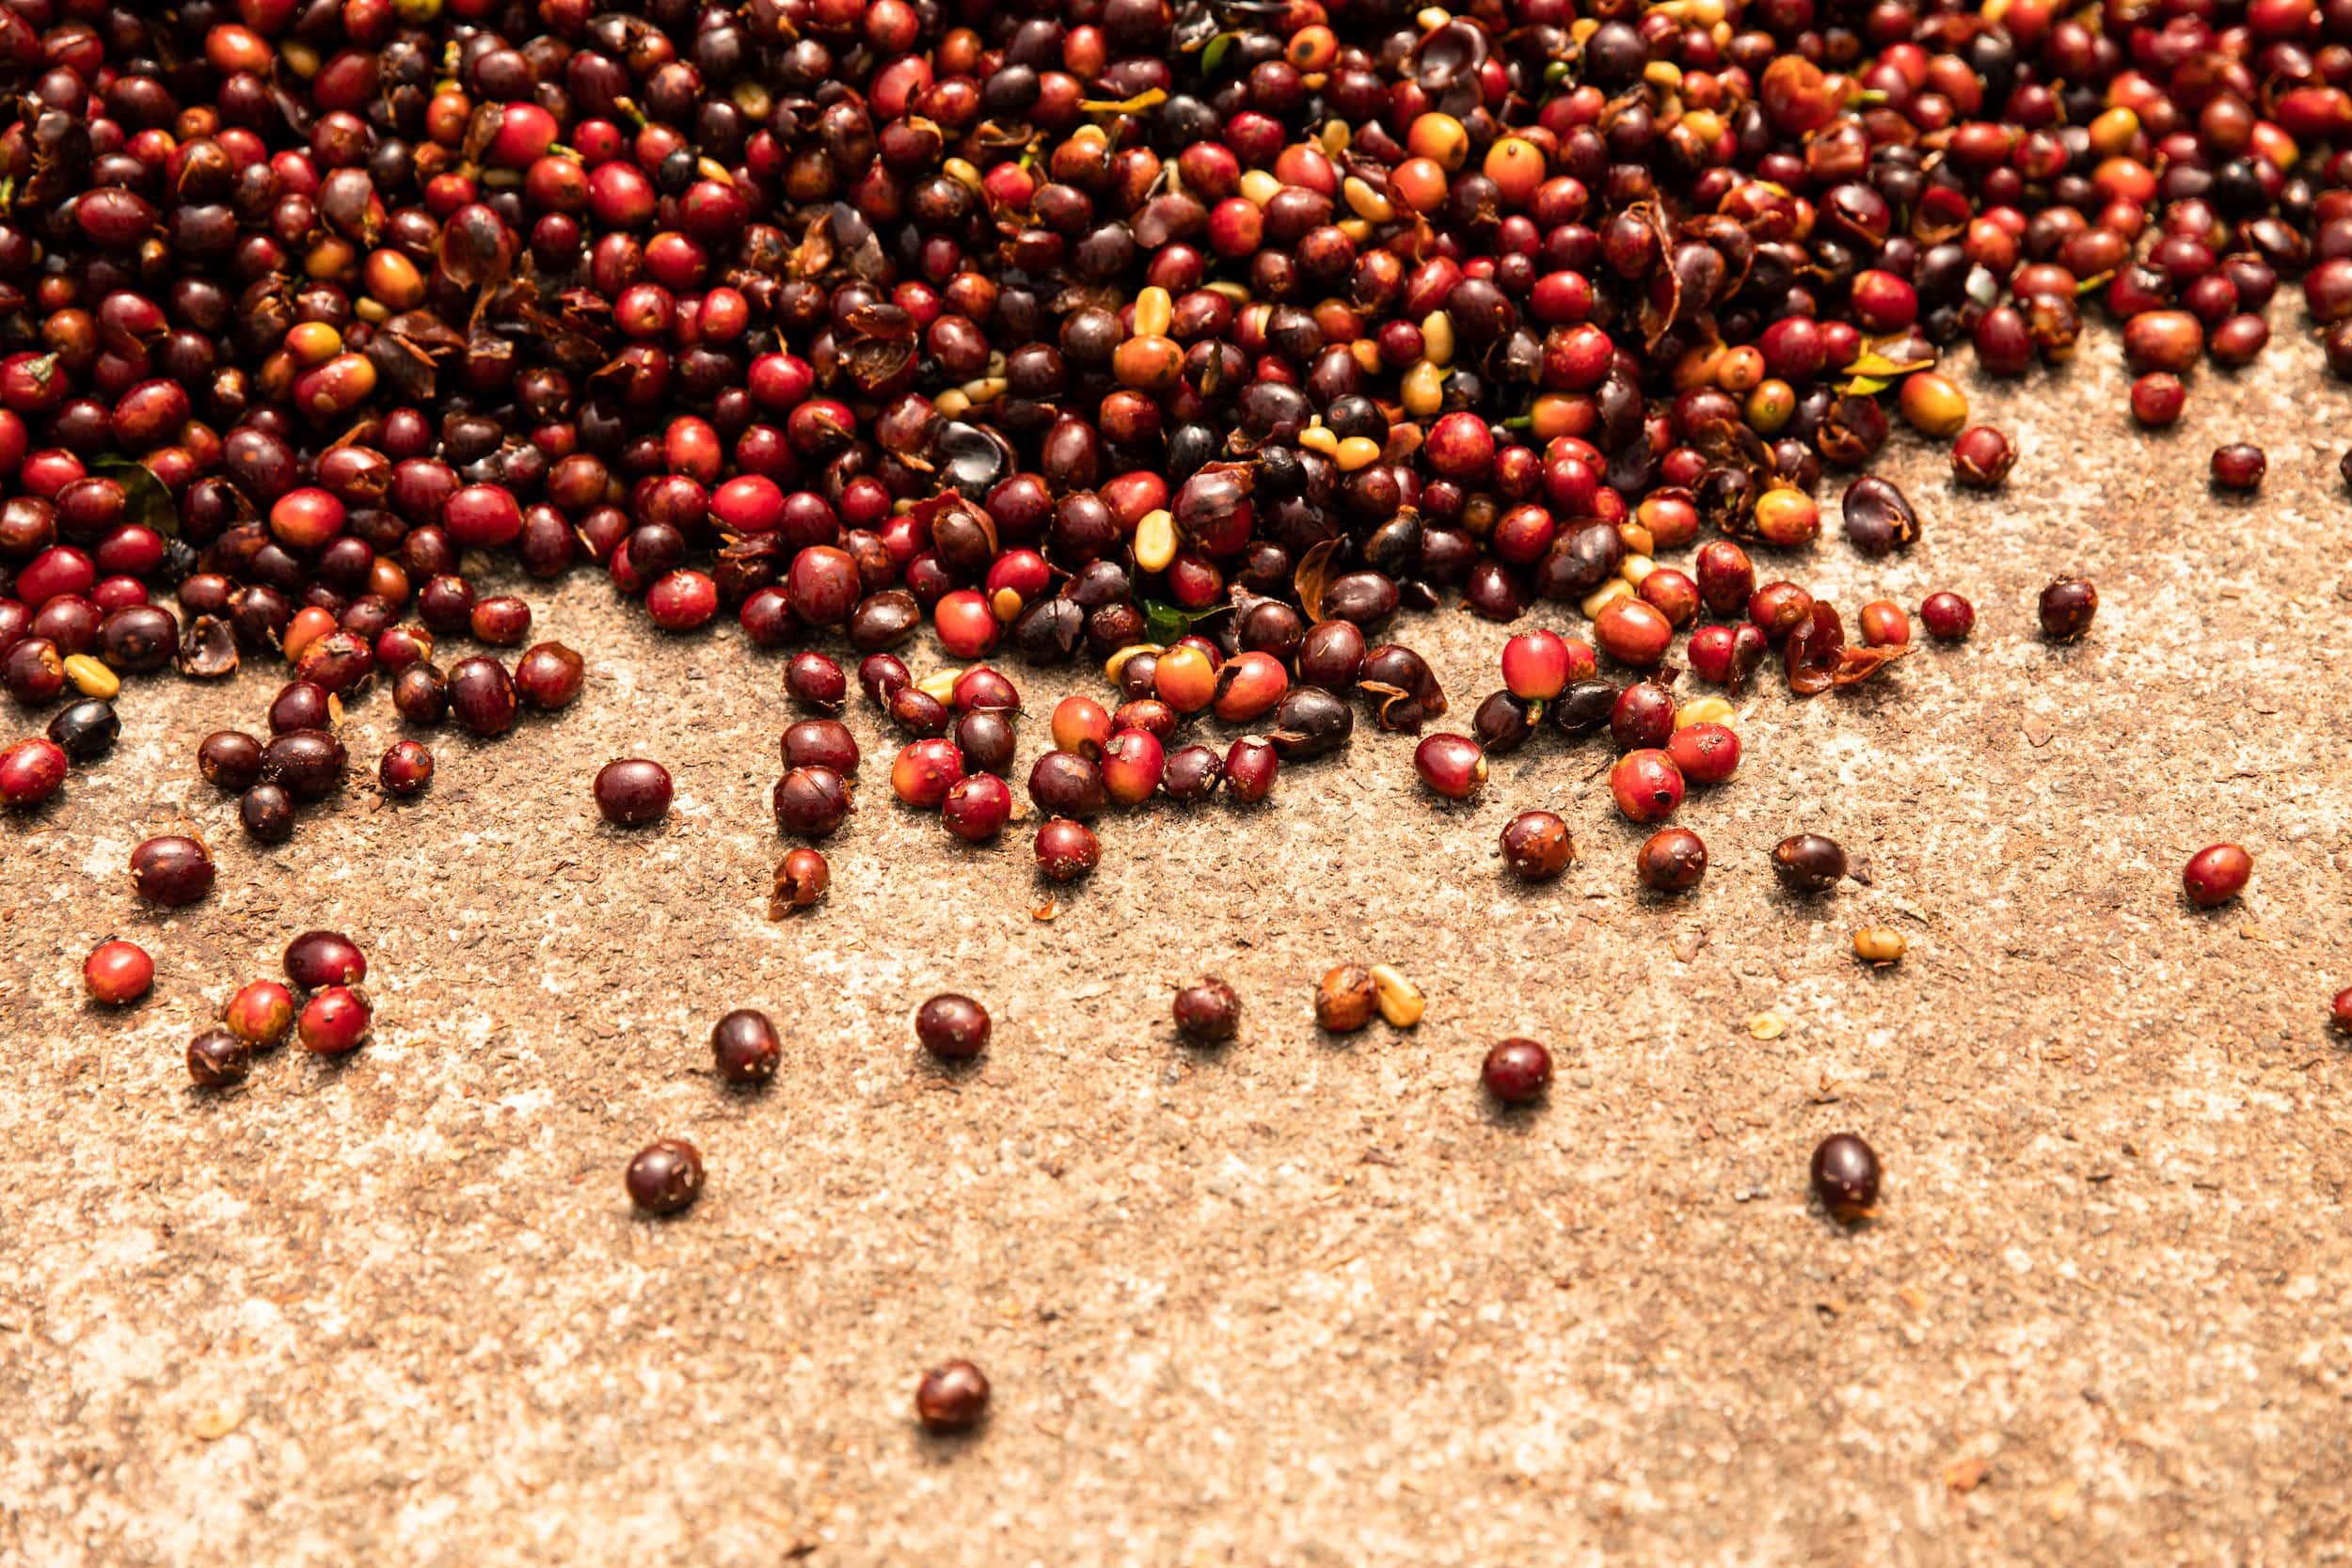 Do Coffee Plant Varieties Affect Flavor?